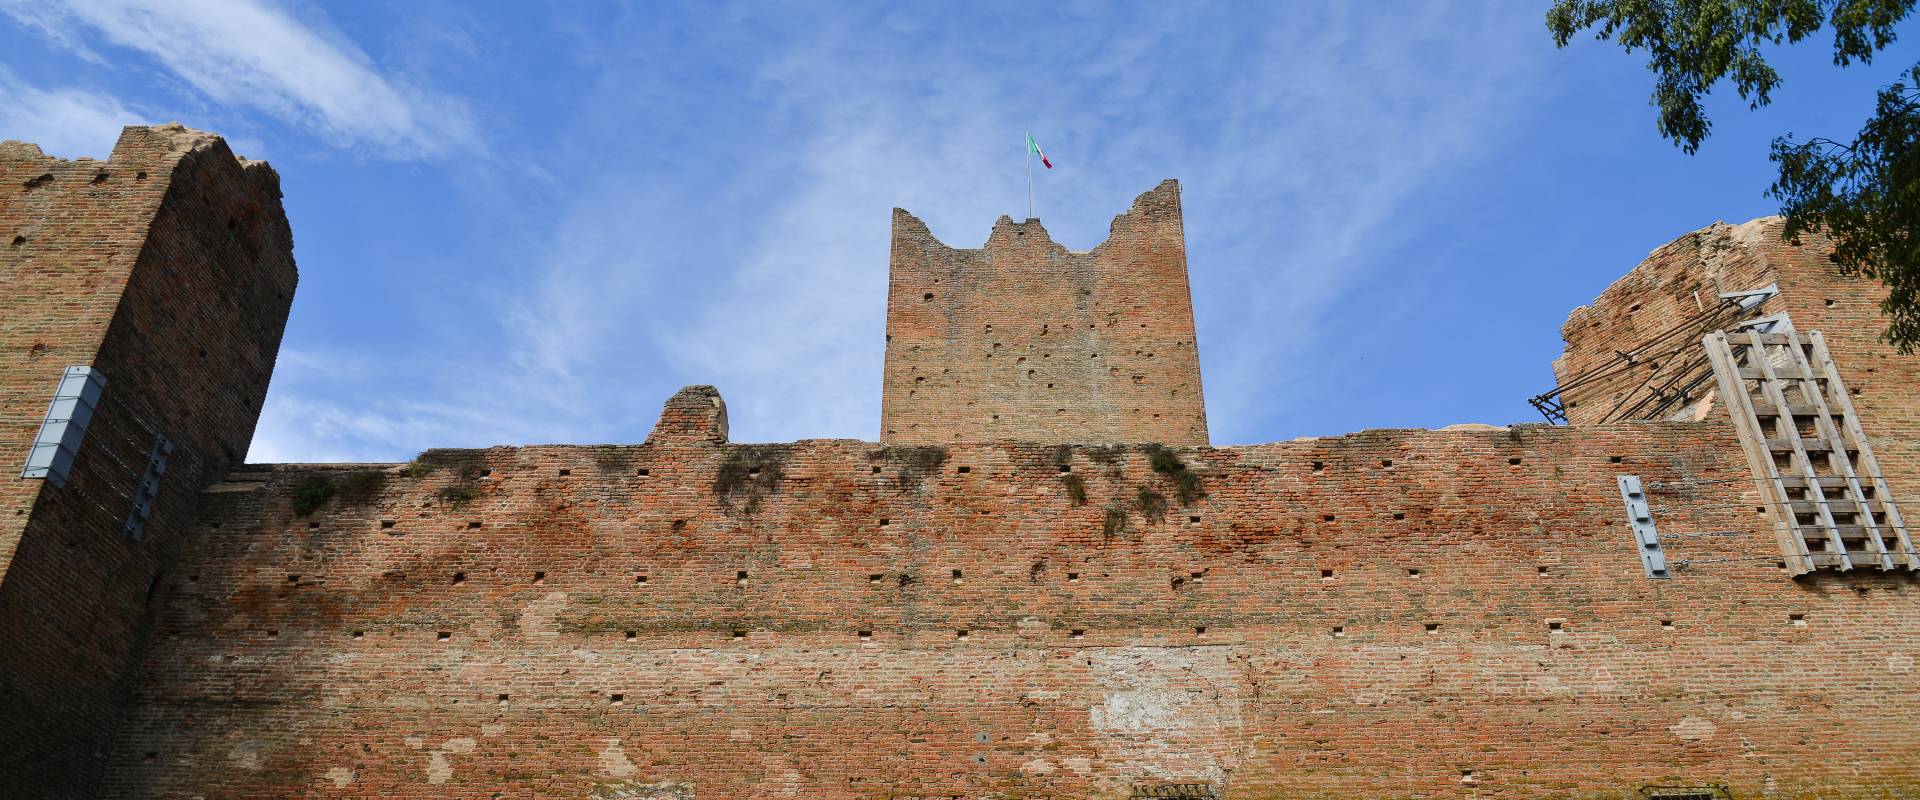 Rocca Medievale photo by SimoneLugarini